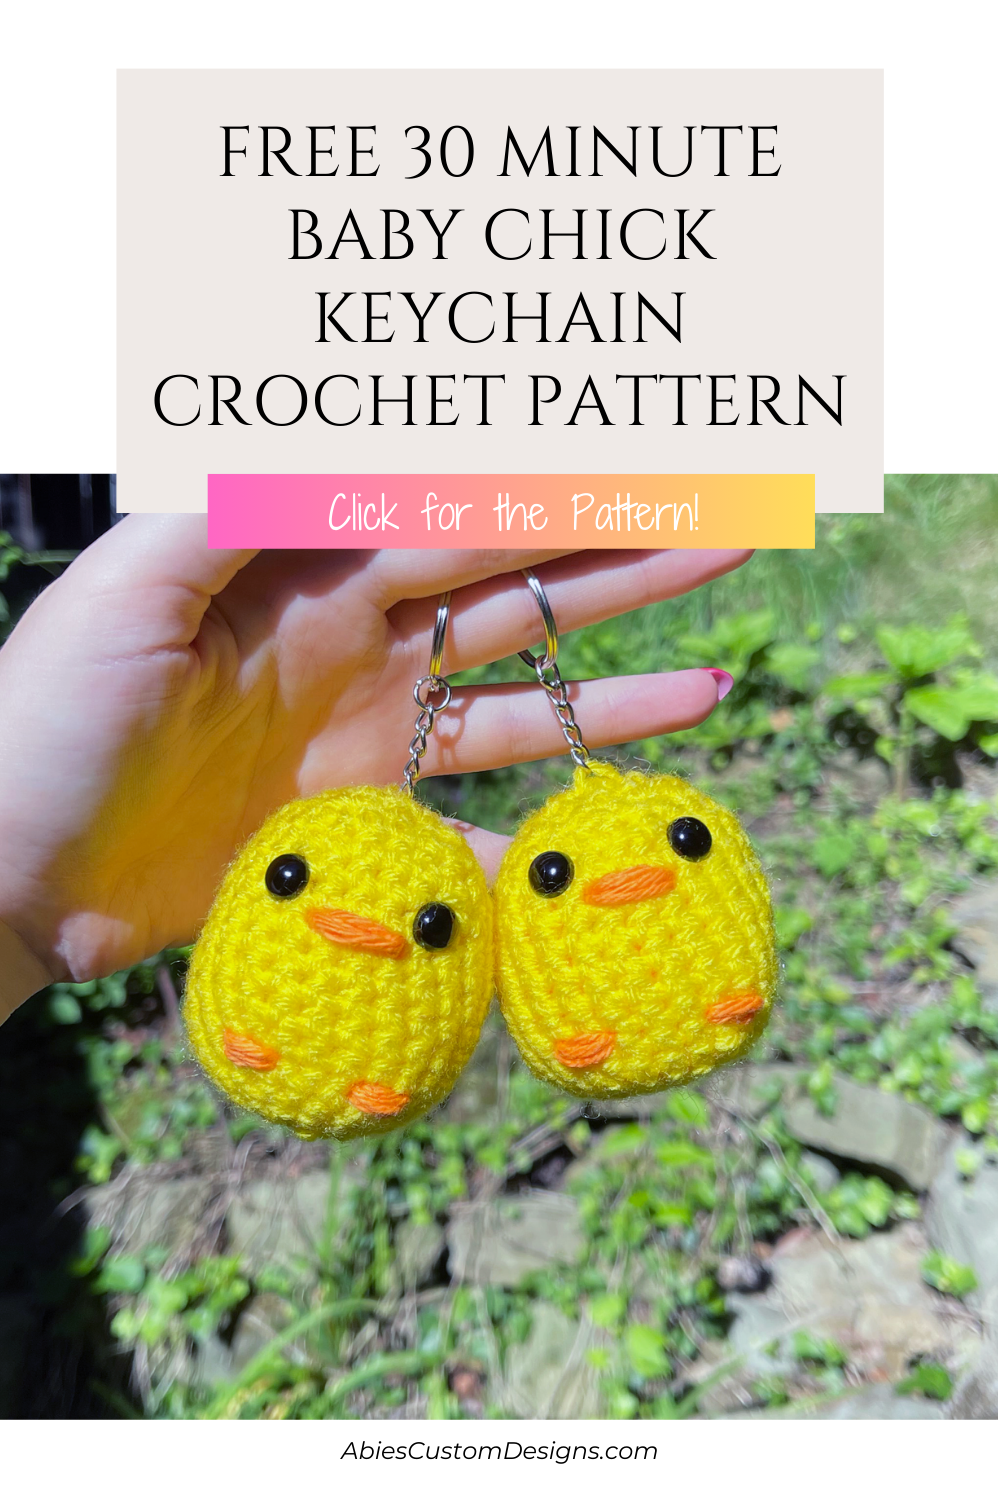 Free 30 Minute Baby Chick Keychain Crochet Pattern